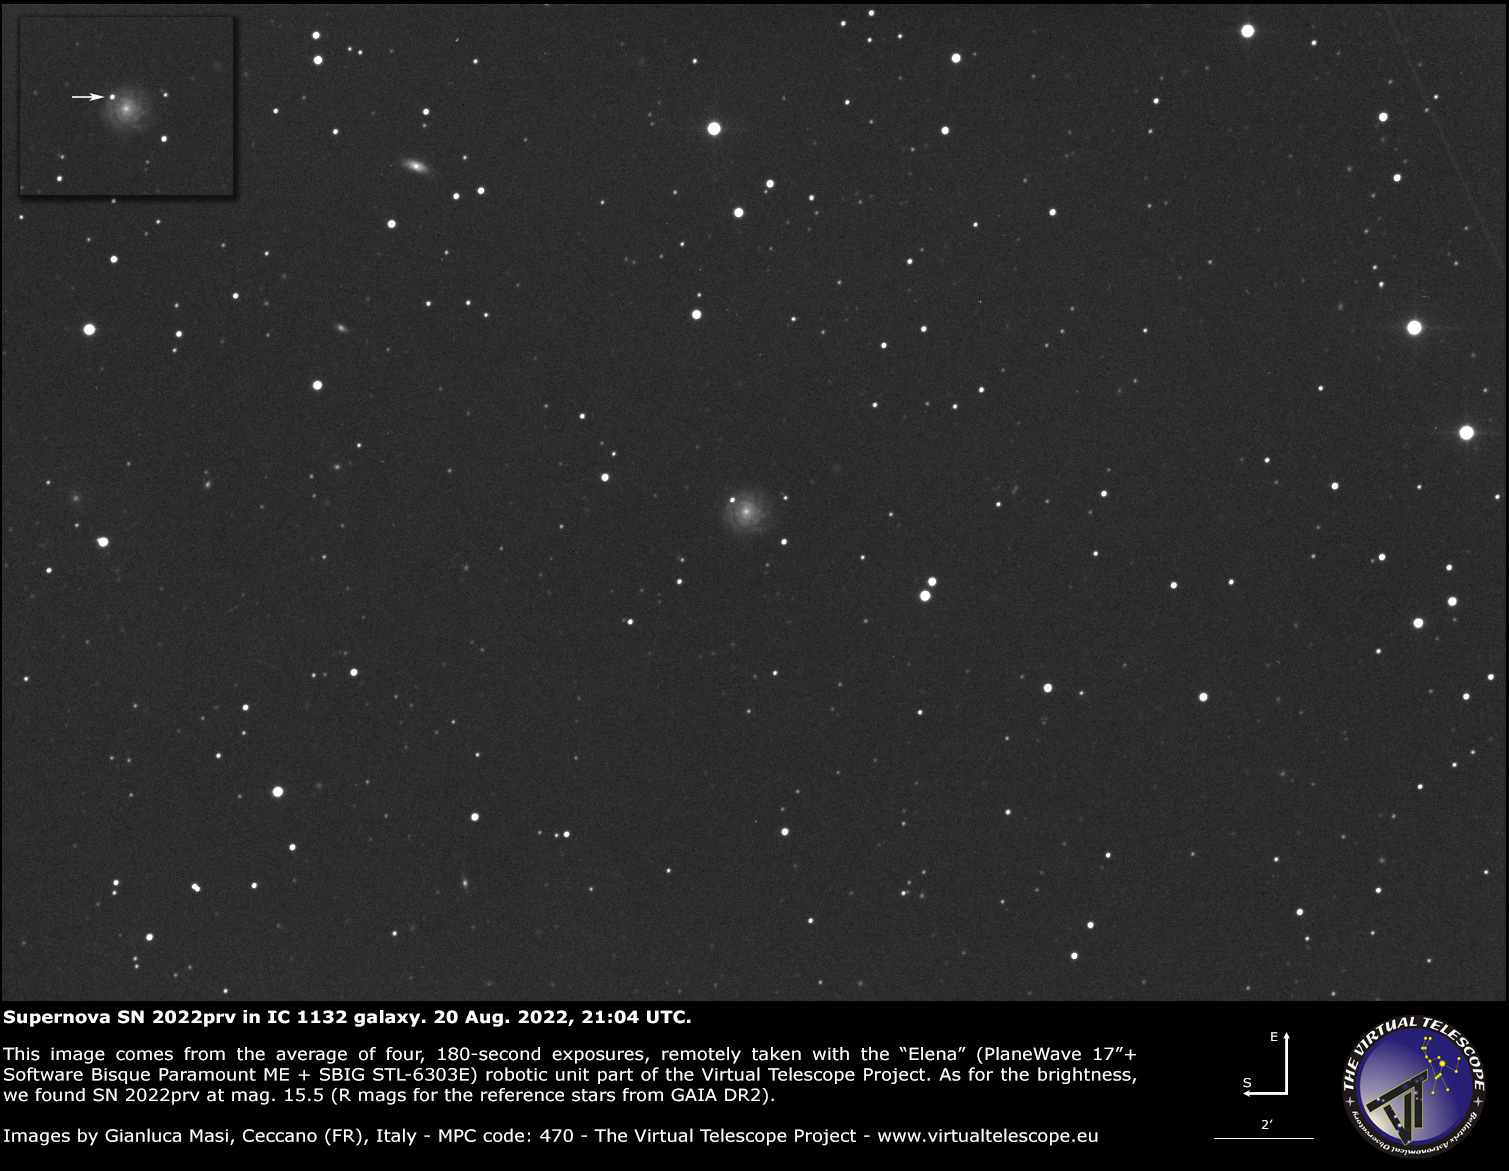 Supernova SN 2022prv in IC 1132 galaxy: 20 Aug. 2022.